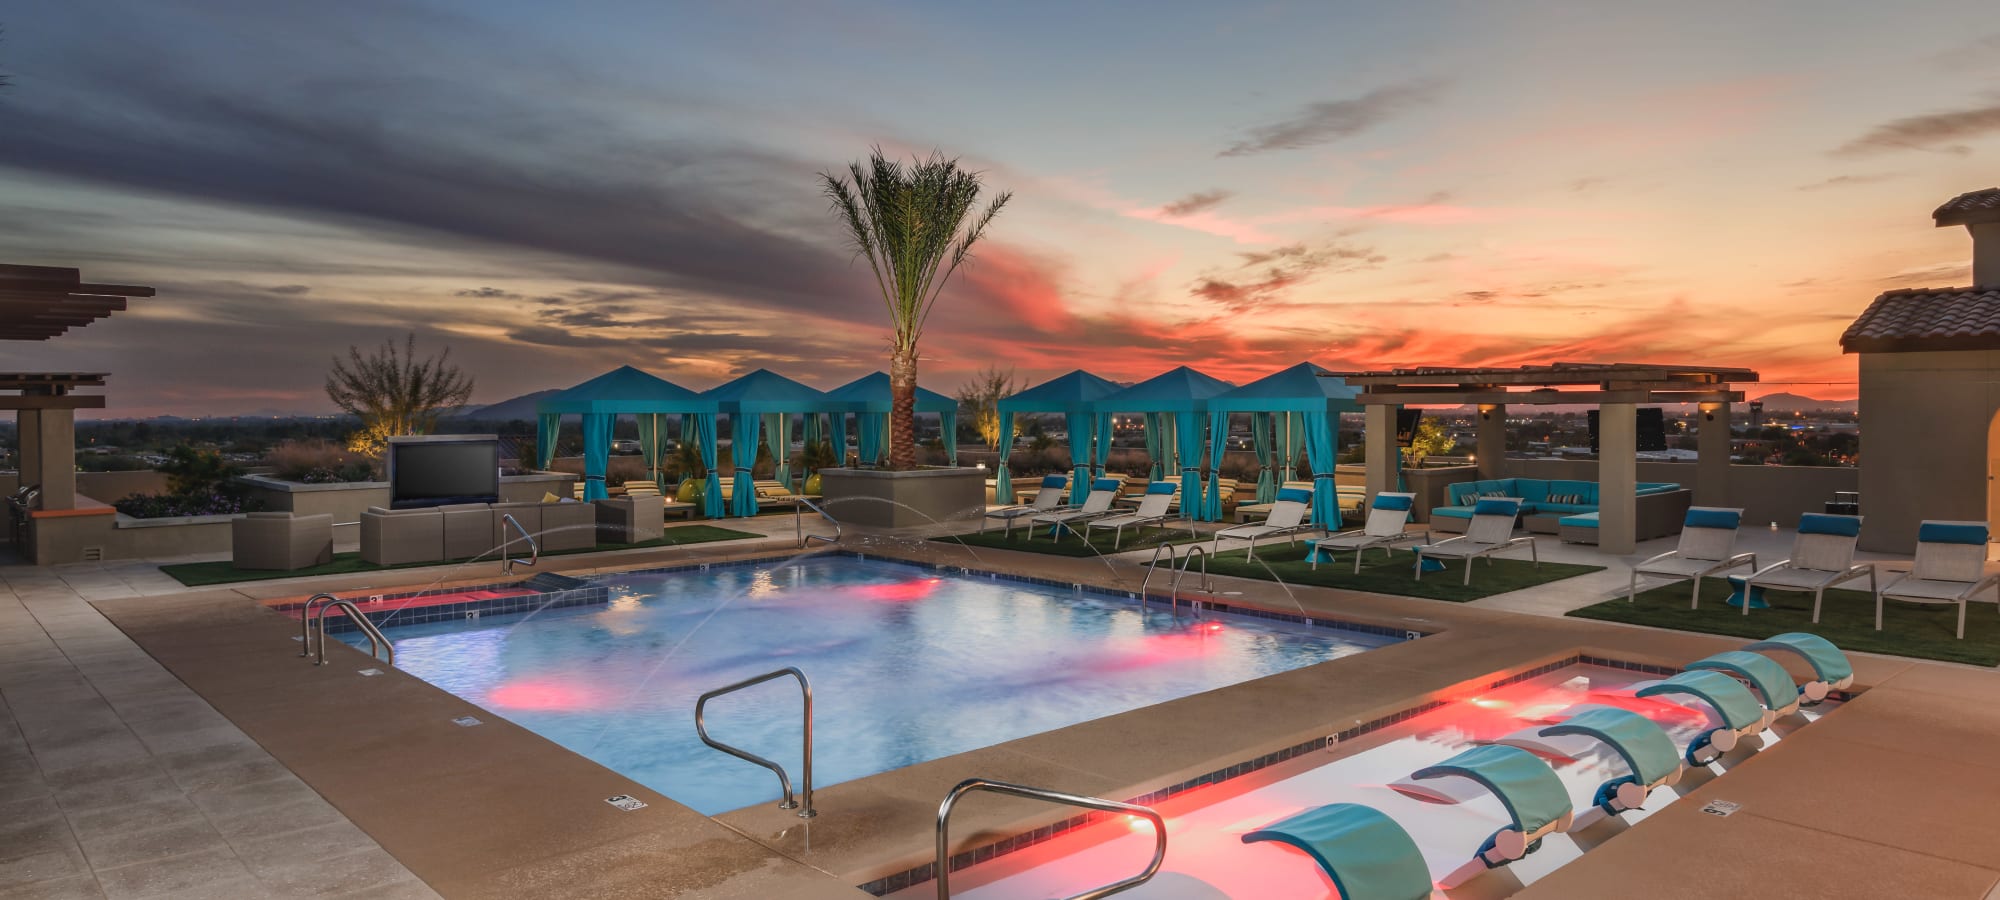 Pool area at dusk at The Core Scottsdale in Scottsdale, Arizona